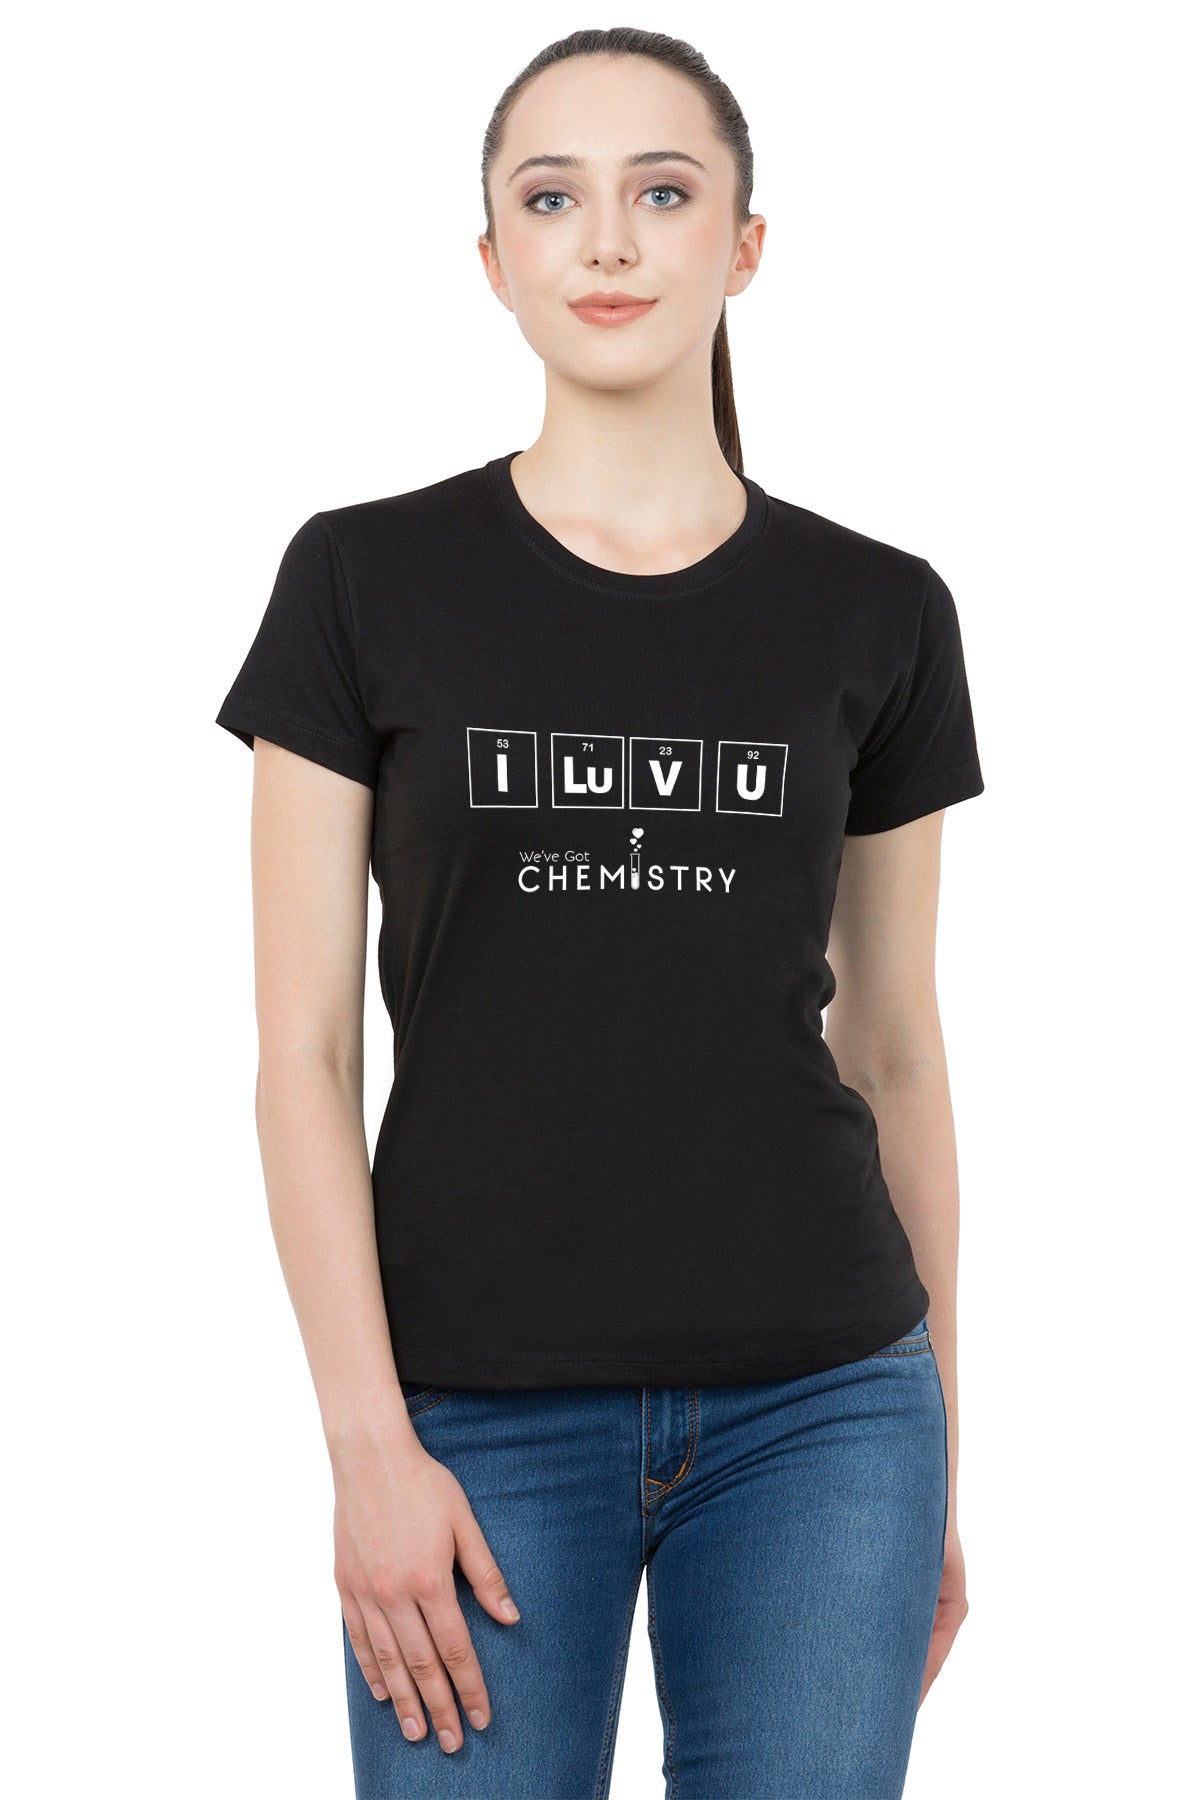 I Luv Chemistary matching Couple T shirts- Black